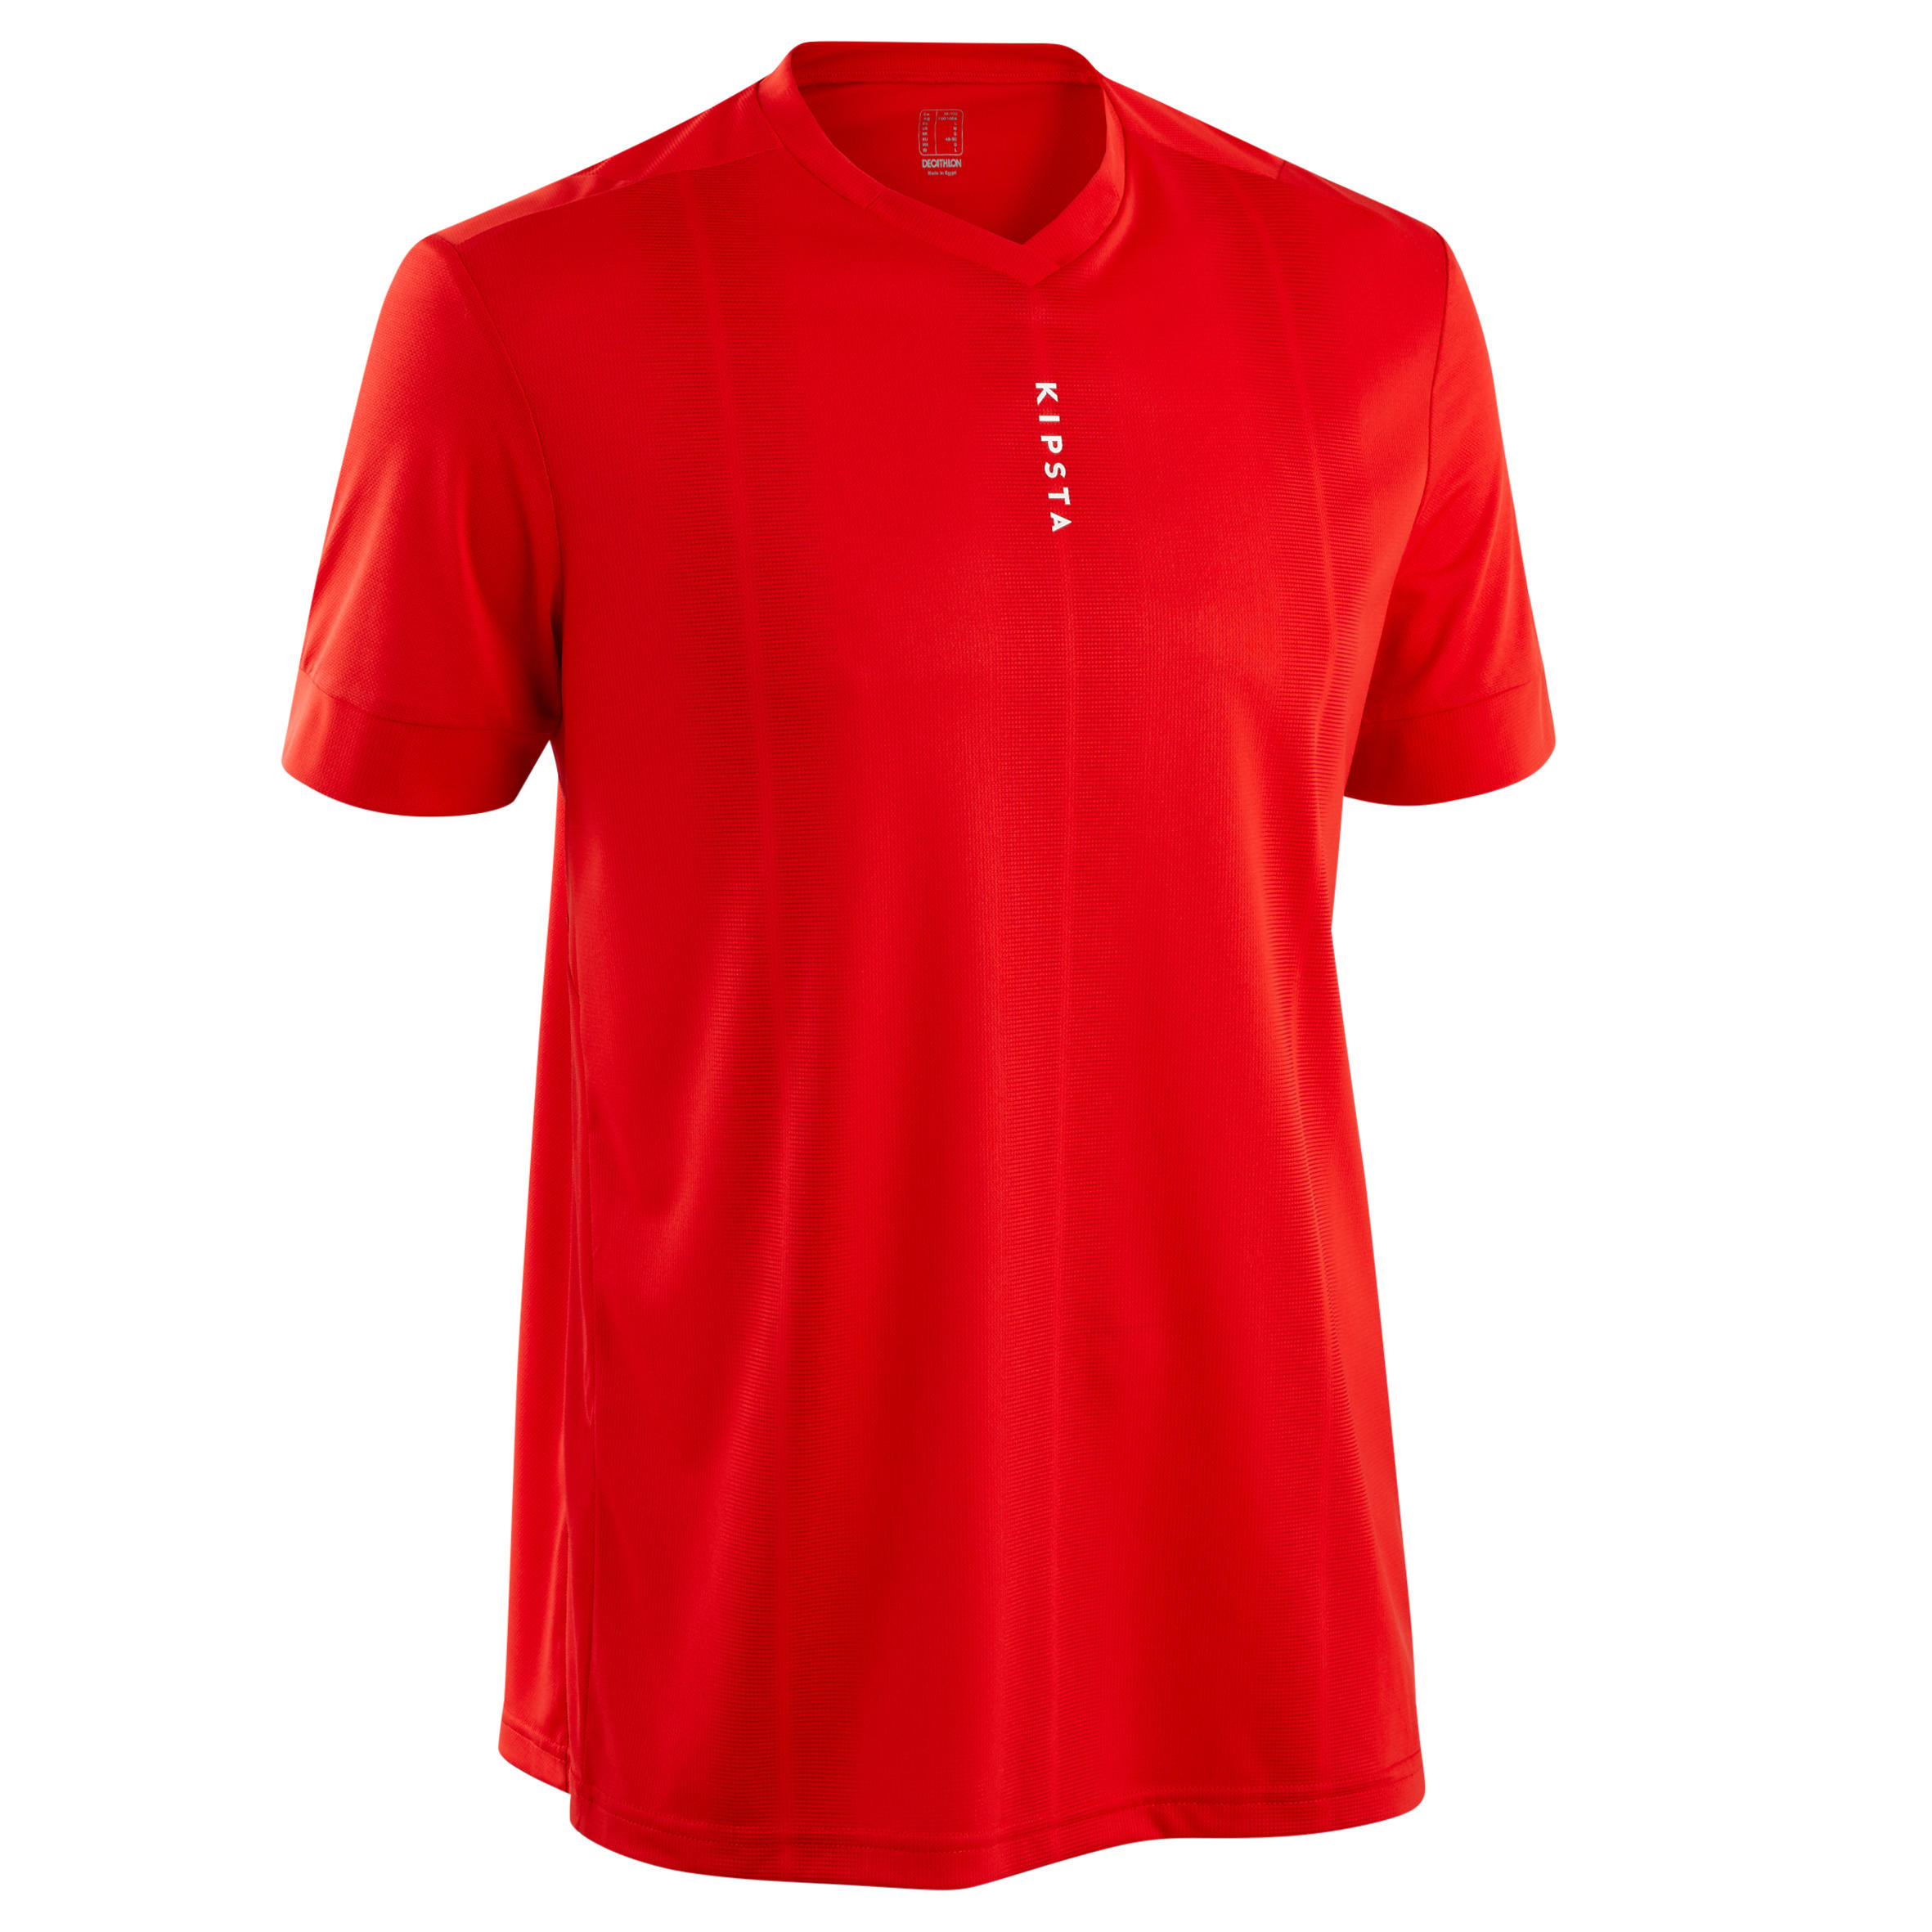 KIPSTA Adult Football Shirt F500 - Plain Red